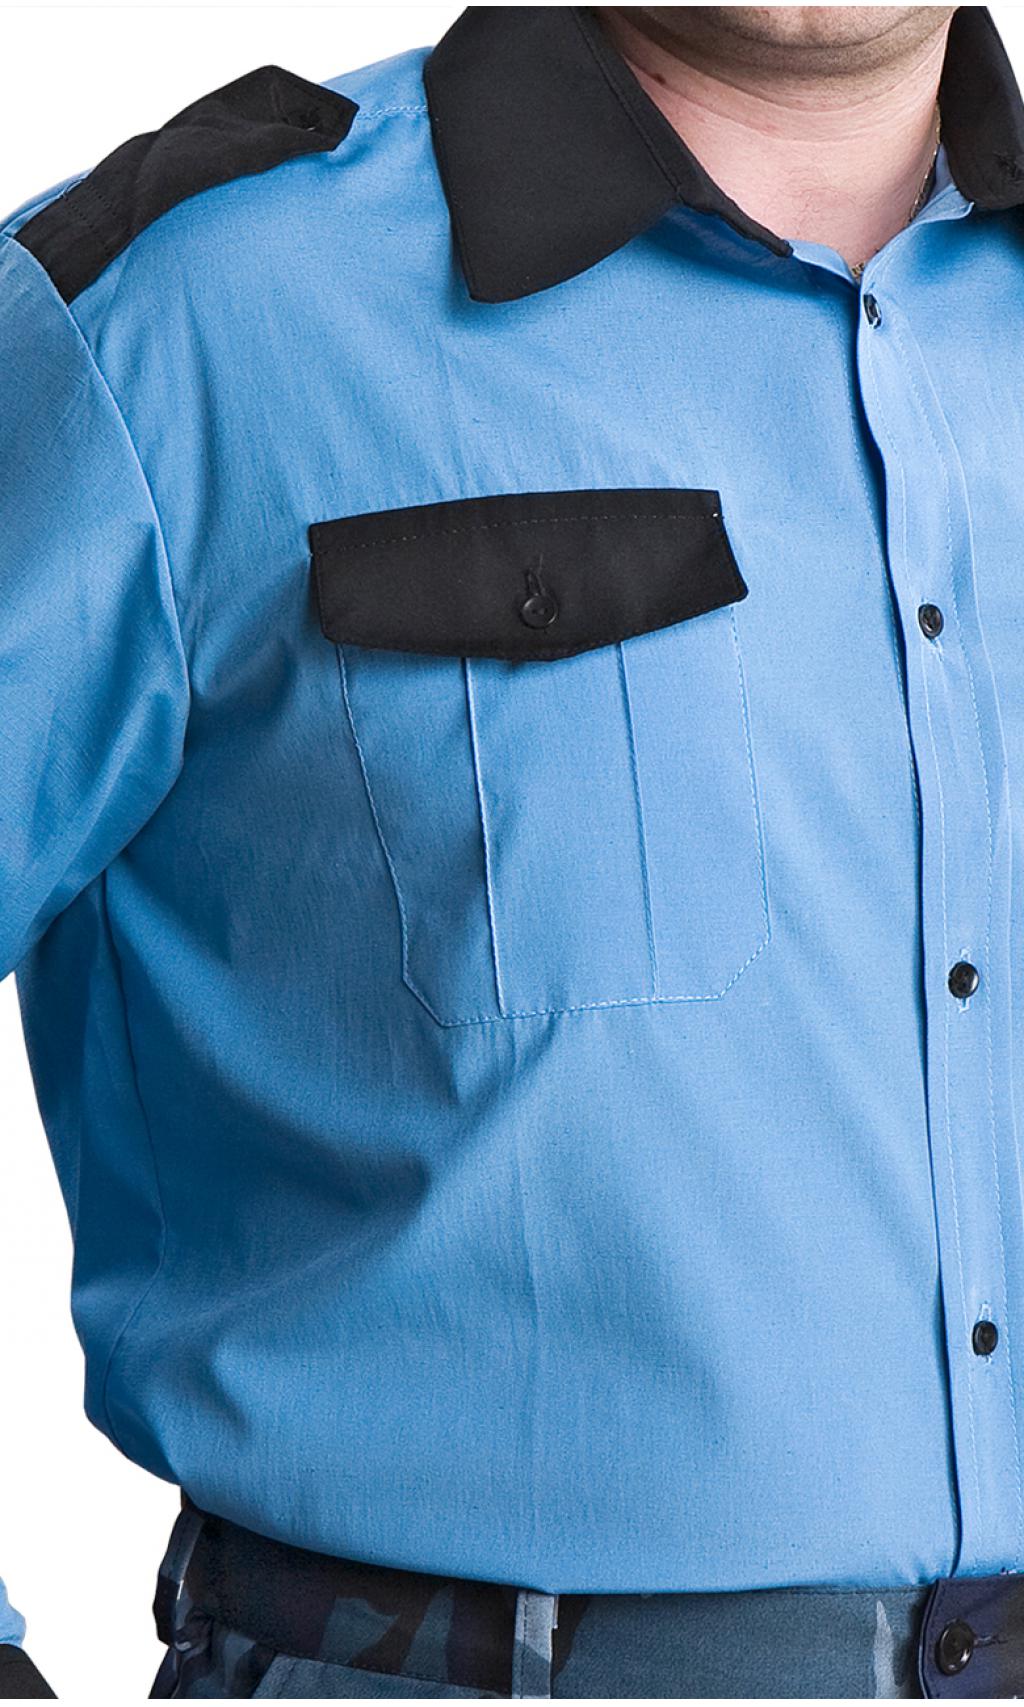 Рубашка охранника длин.рукав голубая (р.44/170-176)